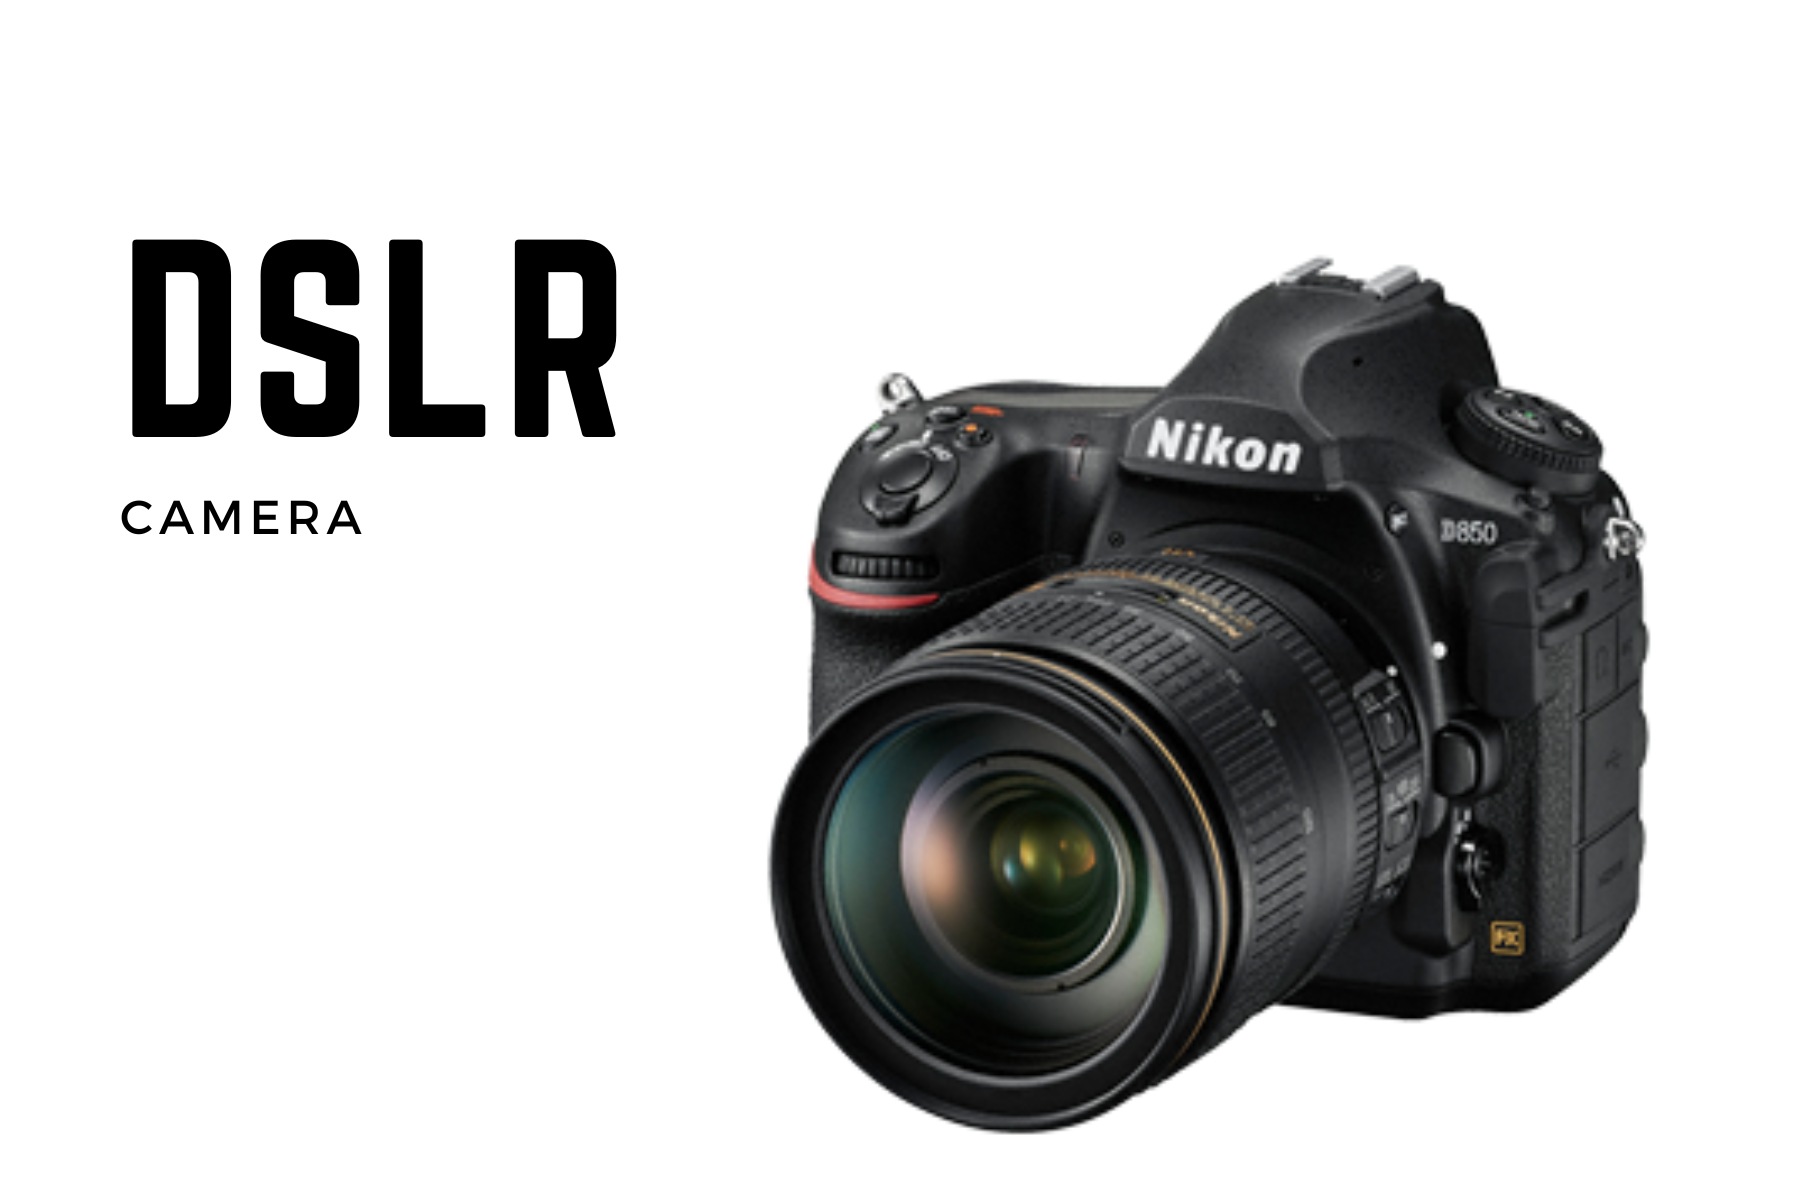 A Nikon DSLR Camera